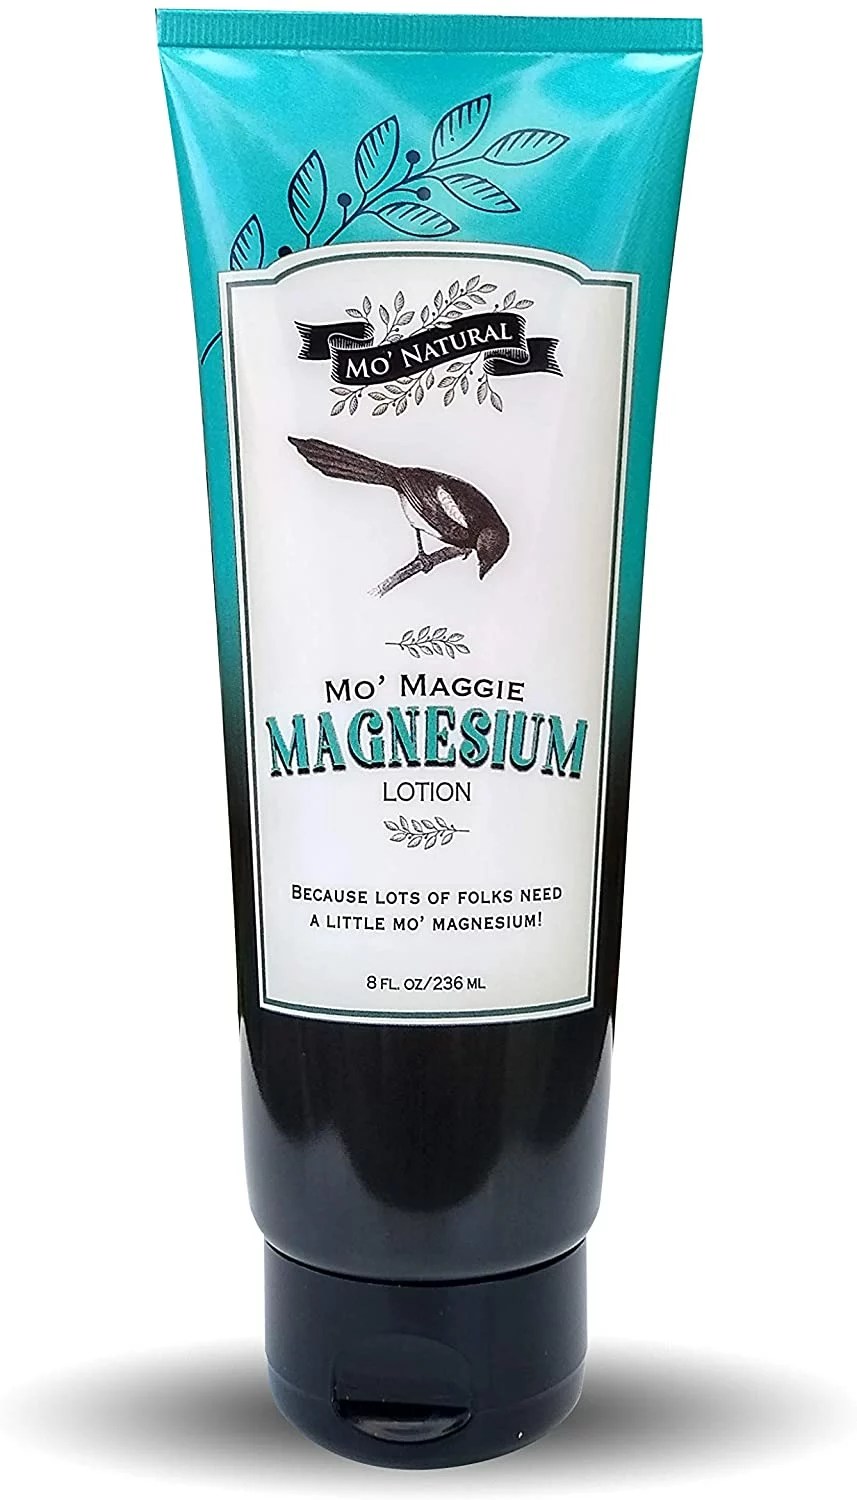 Mo’ Maggie Magnesium Lotion, magnesium body lotion